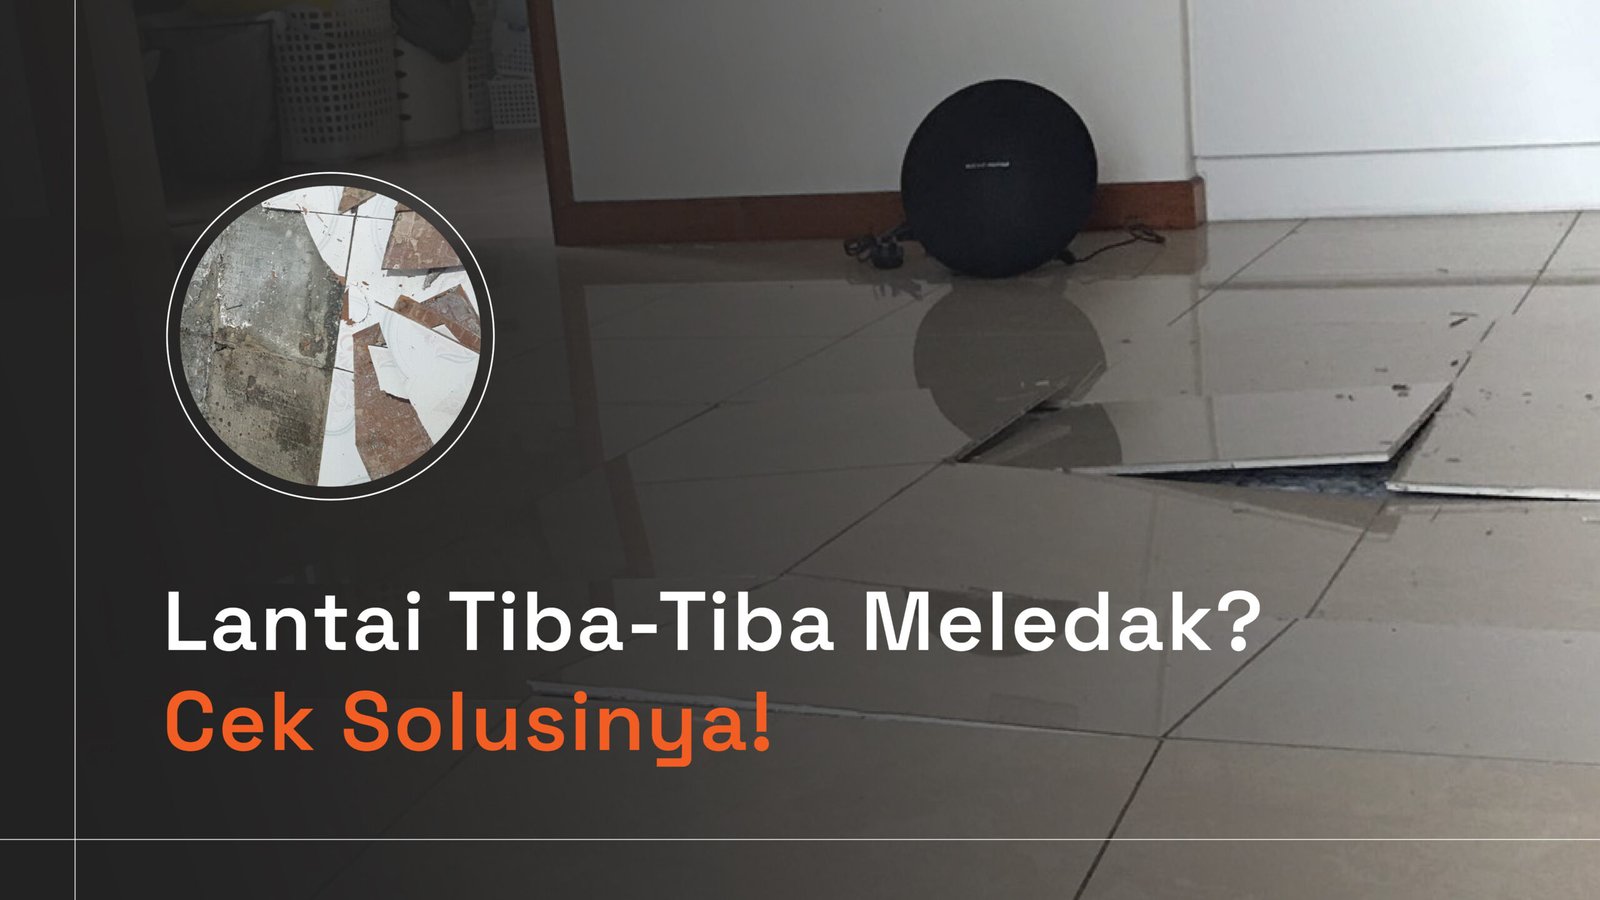 You are currently viewing Lantai Tiba-Tiba Meledak? Cek Solusinya!